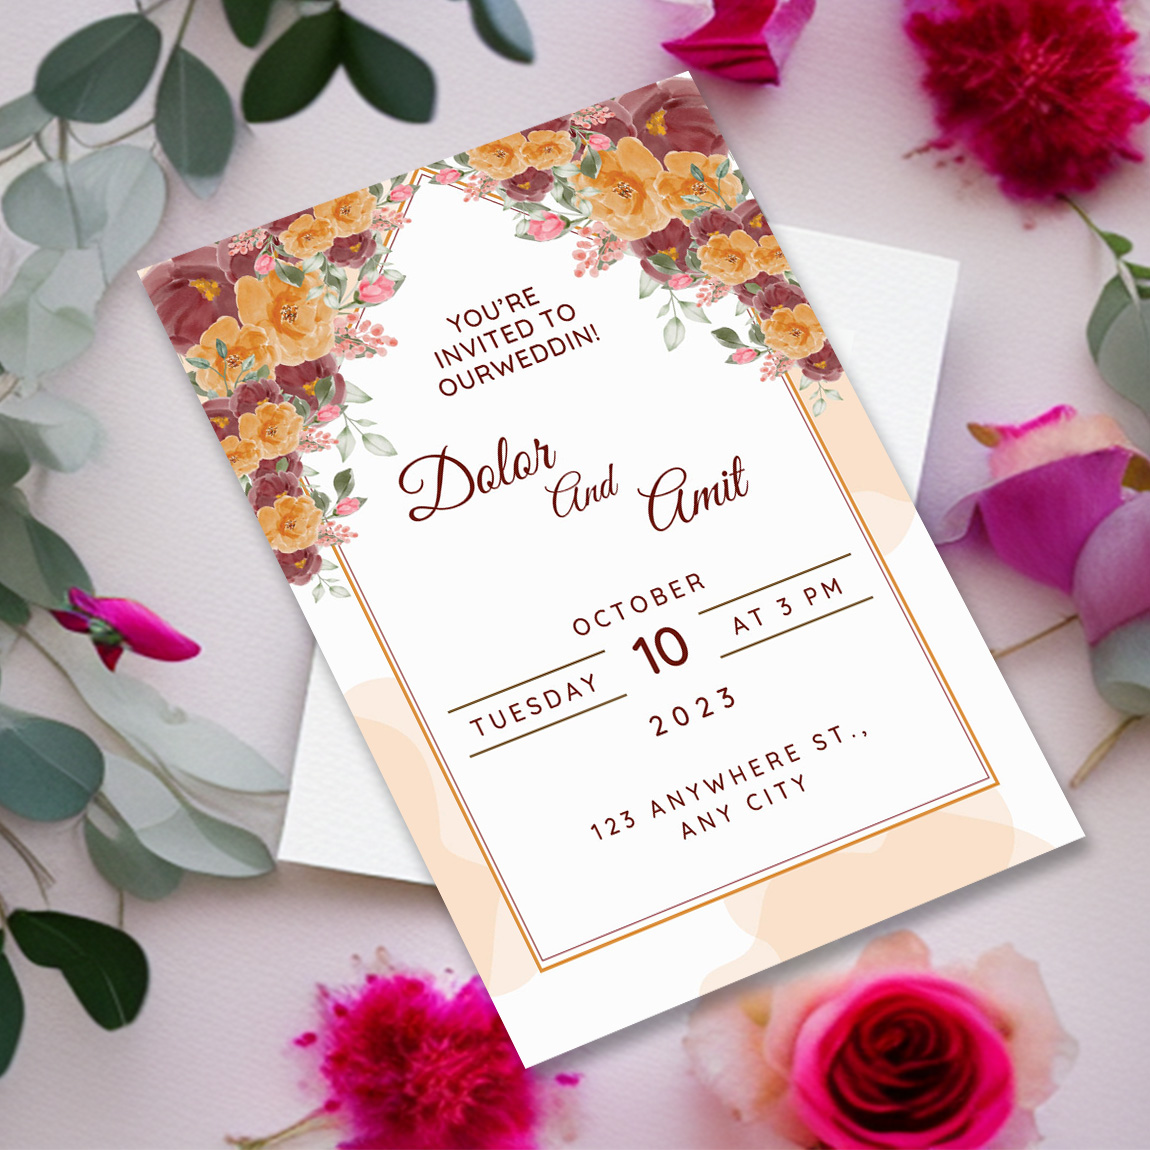 Floral Wedding Invitation Card Design cover image.